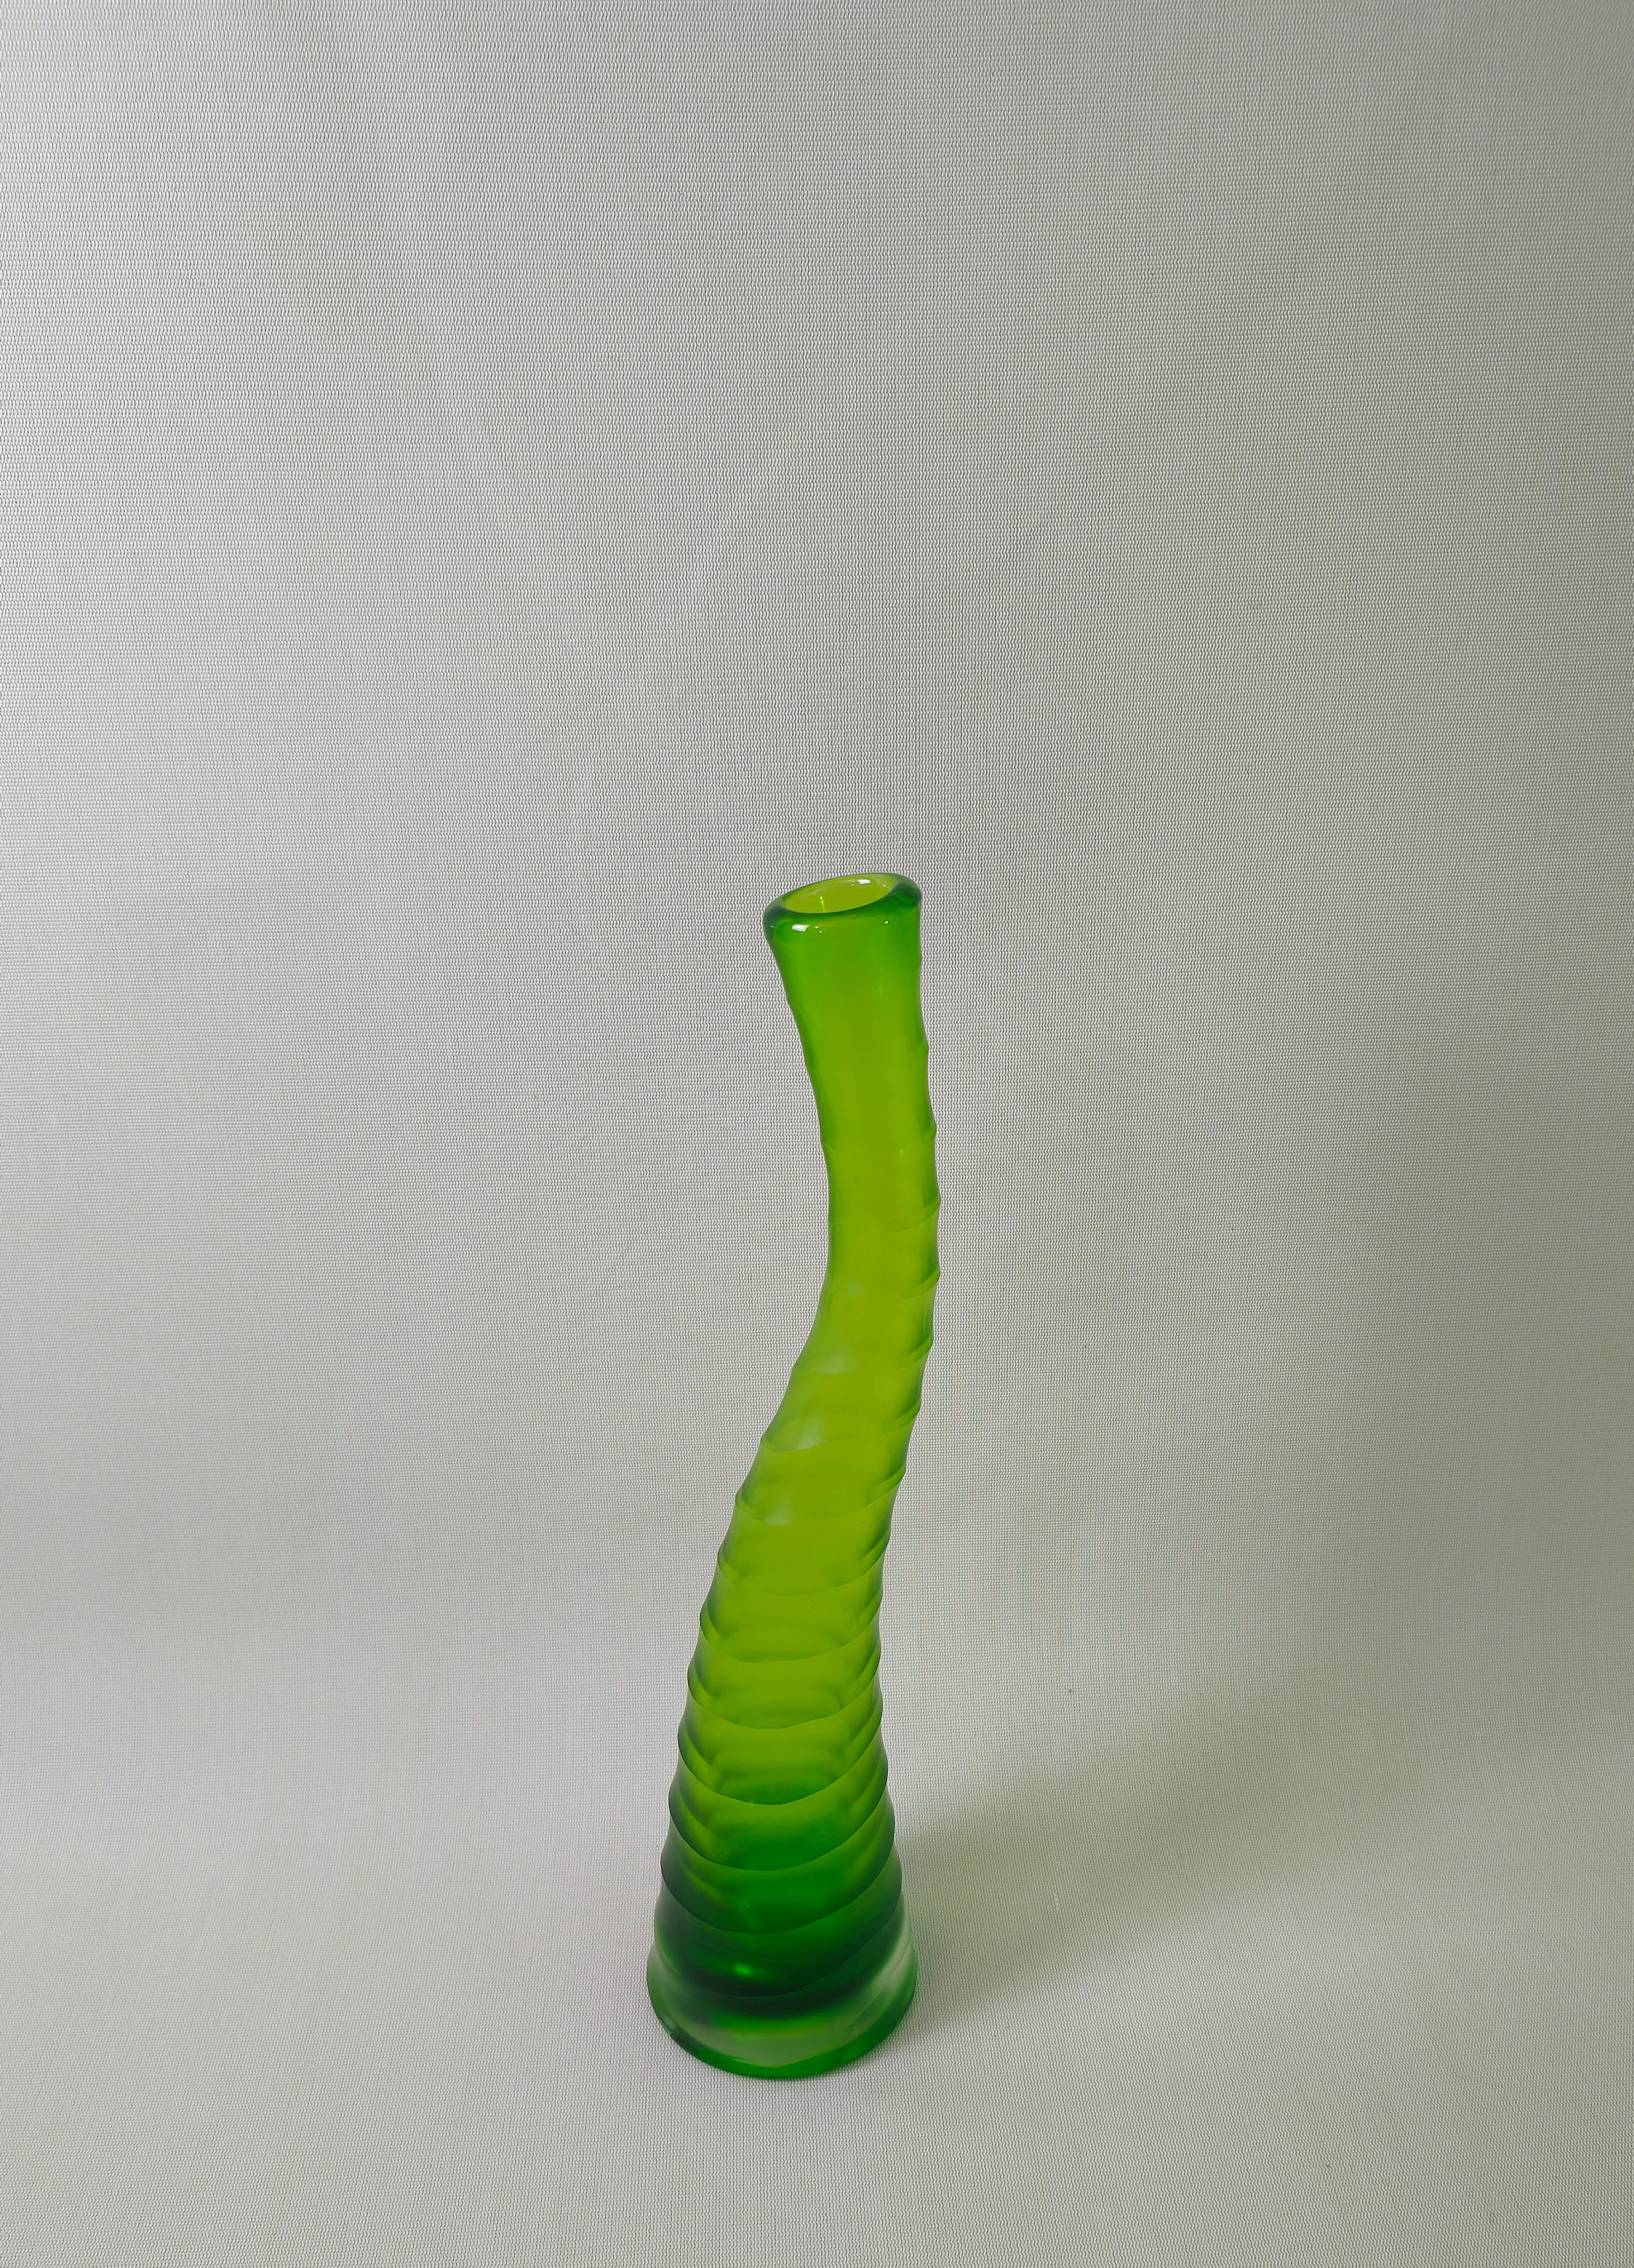 Vase Decorative Object Murano Glass Green Midcentury Modern Italian Design 1970s For Sale 1